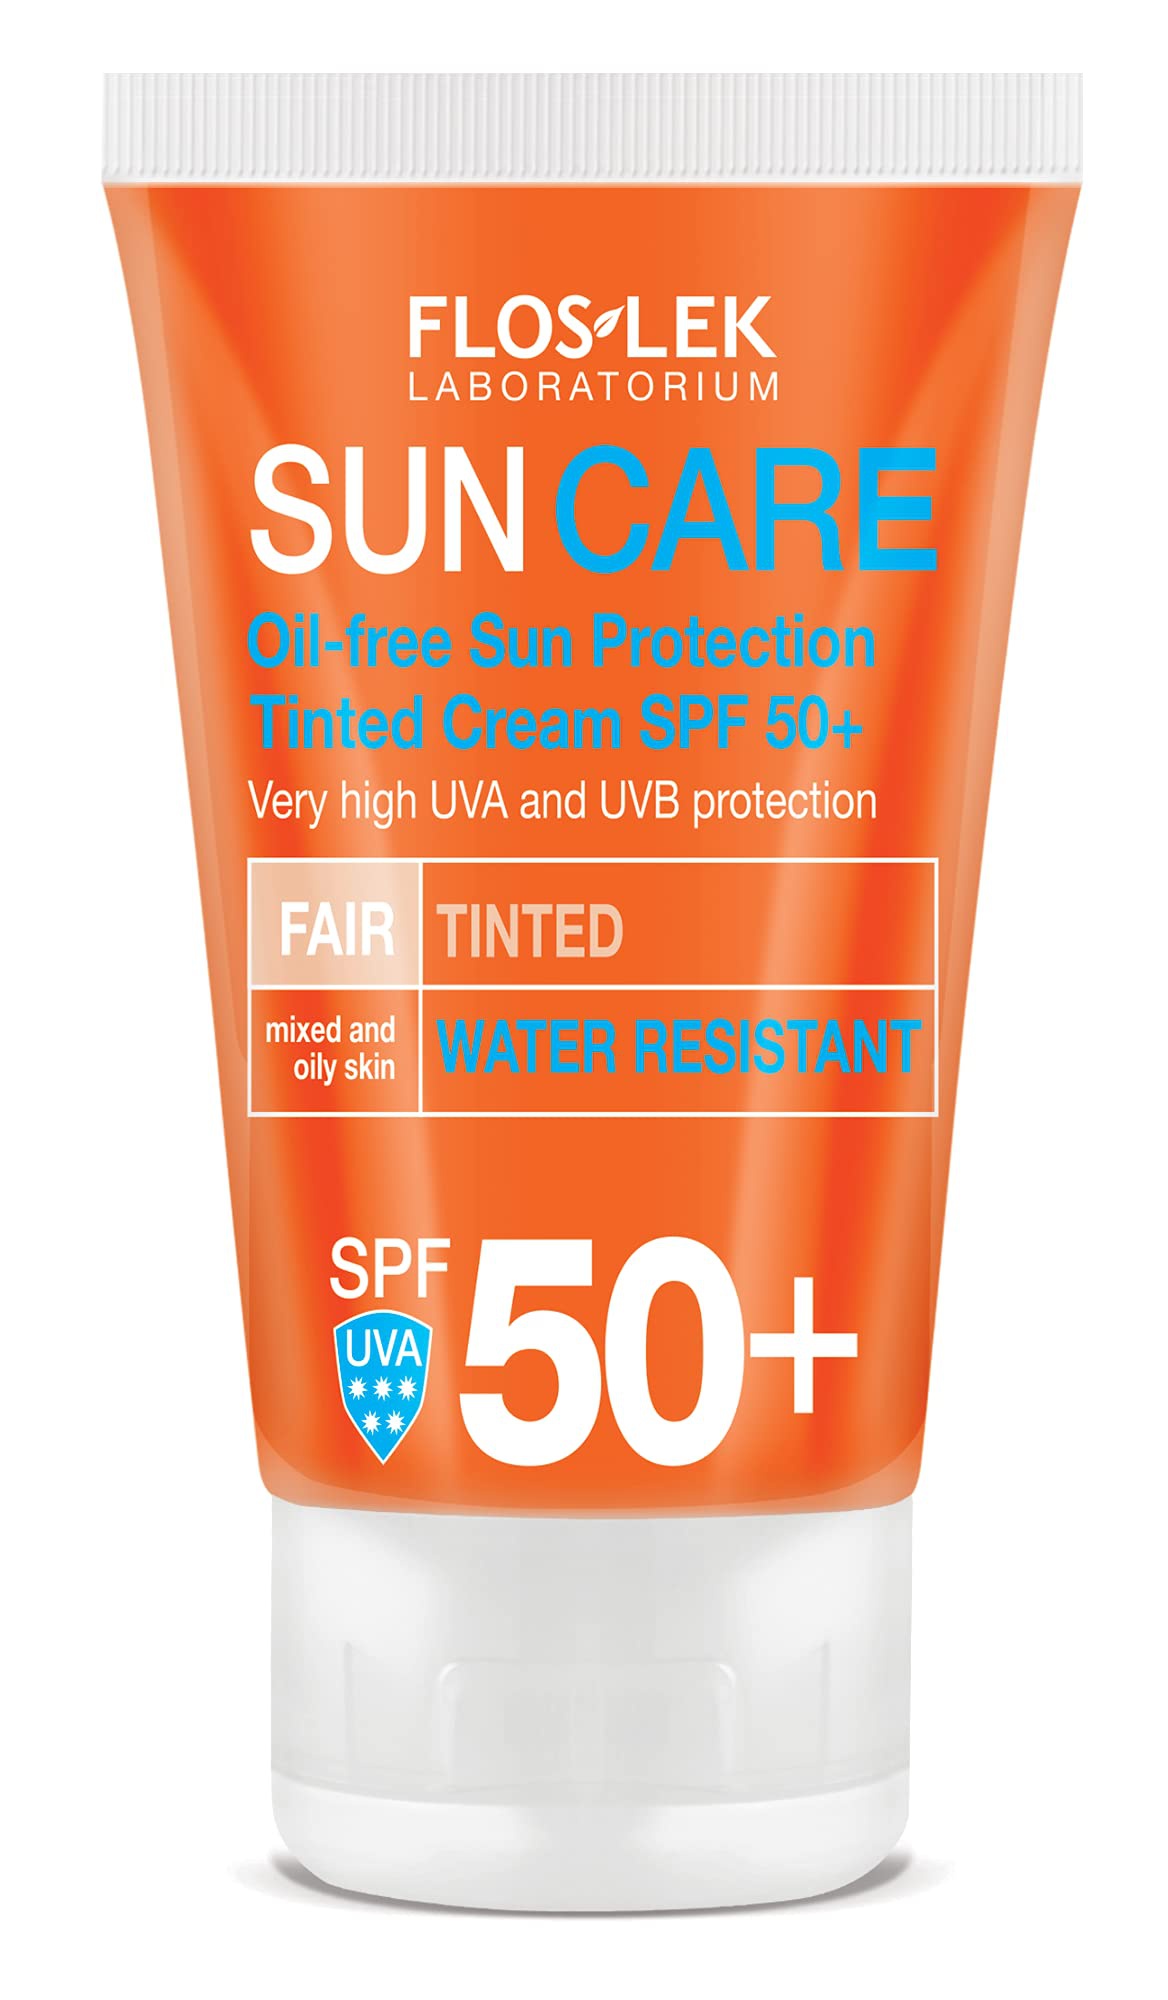 Floslek Sun Care Oil-Free Sun Protection Tinted Cream SPF 50+